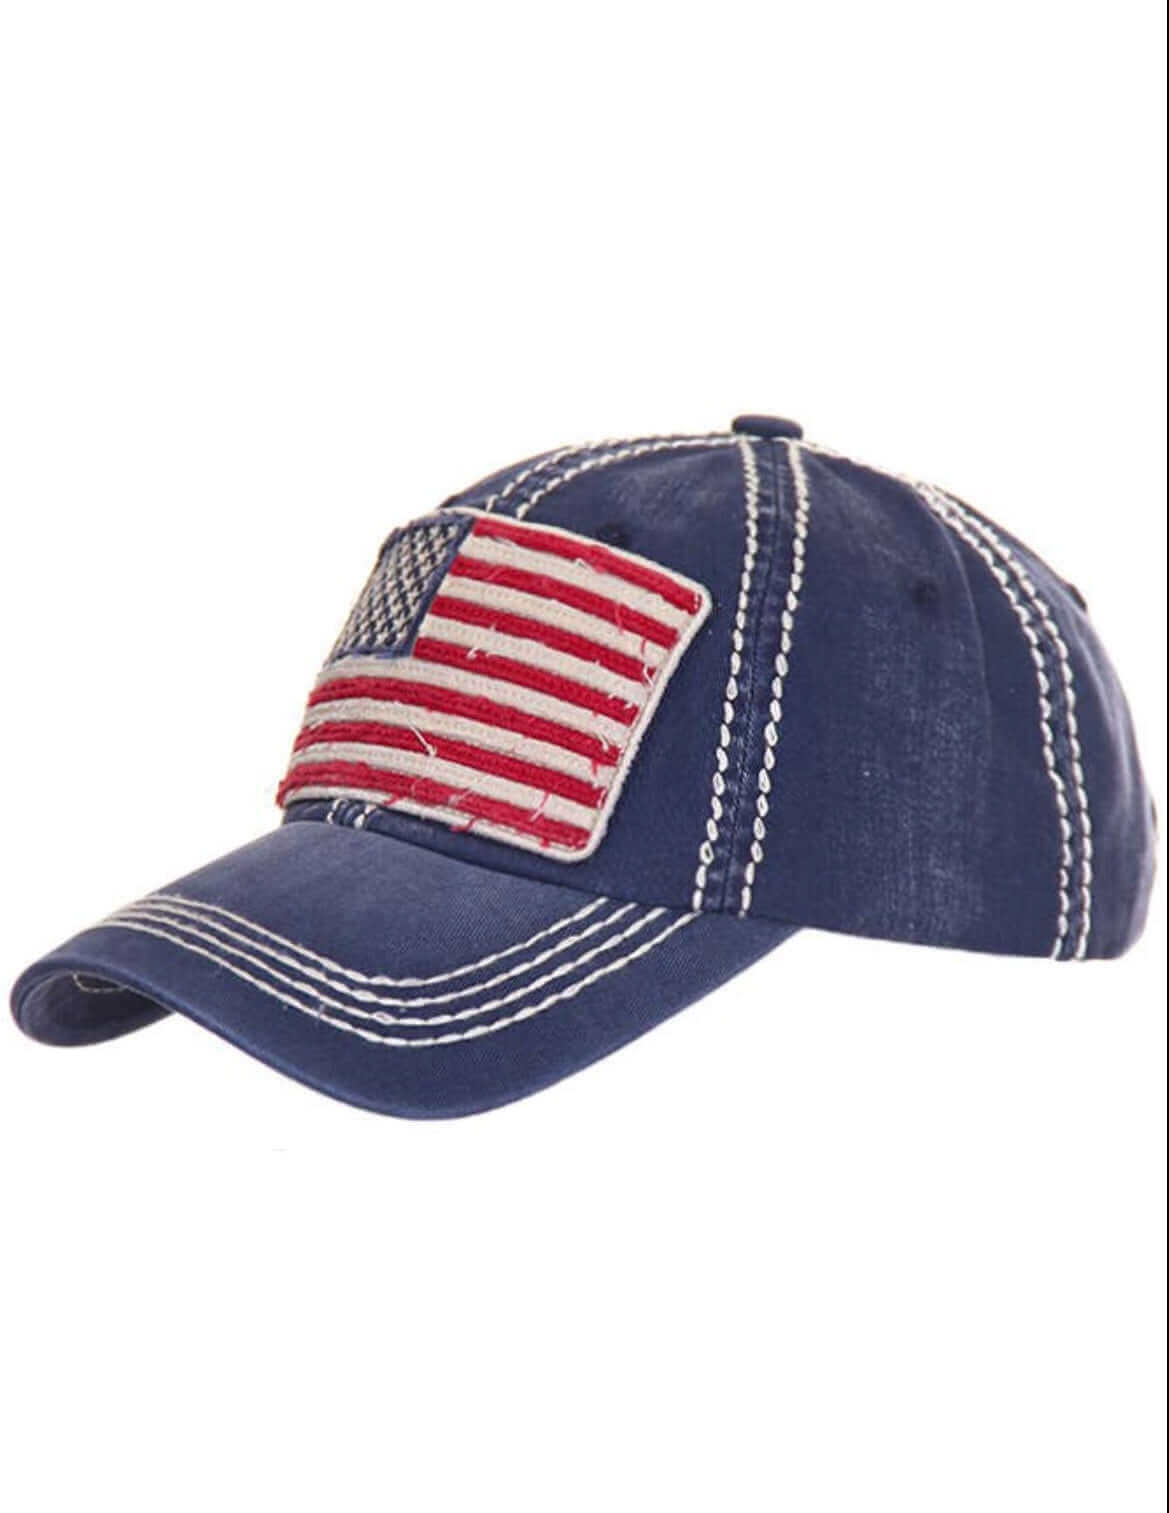 American Flag Vintage Baseball Cap - Navy Baseball Cap accessories, american flag hat, american hat, apparel & accessories, baseball caps, baseball hat, hats